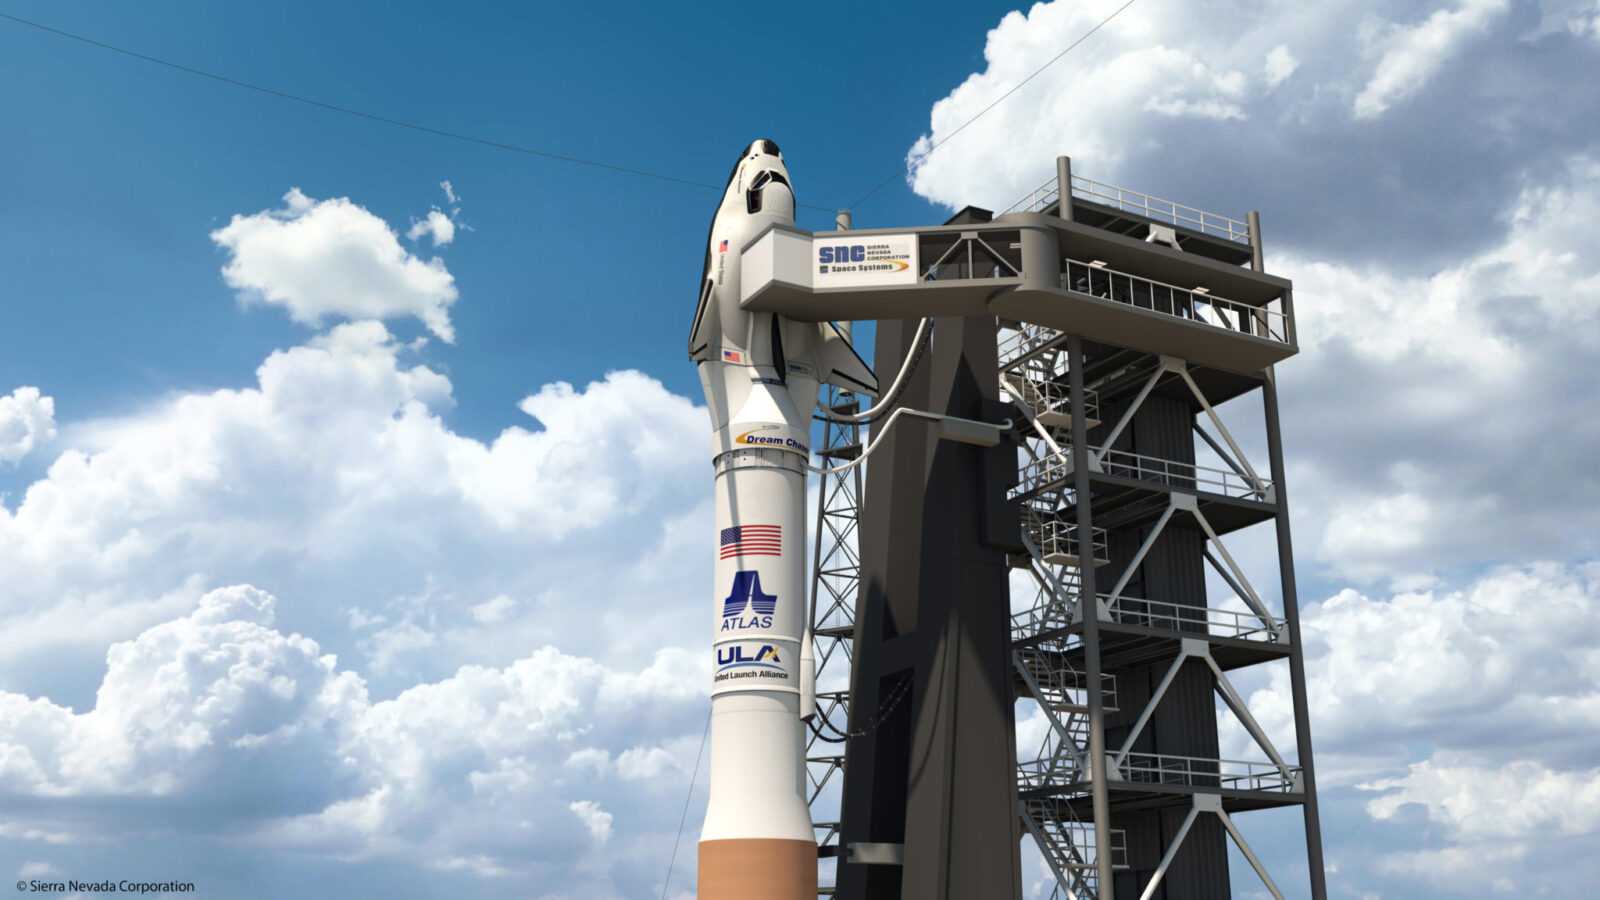 Firefly завершает разработку проекта лунной миссии для запуска в 2023 году (SNCs Dream Chaser atop ULA Atlas V Rocket on Space Launch Complex 41 a)